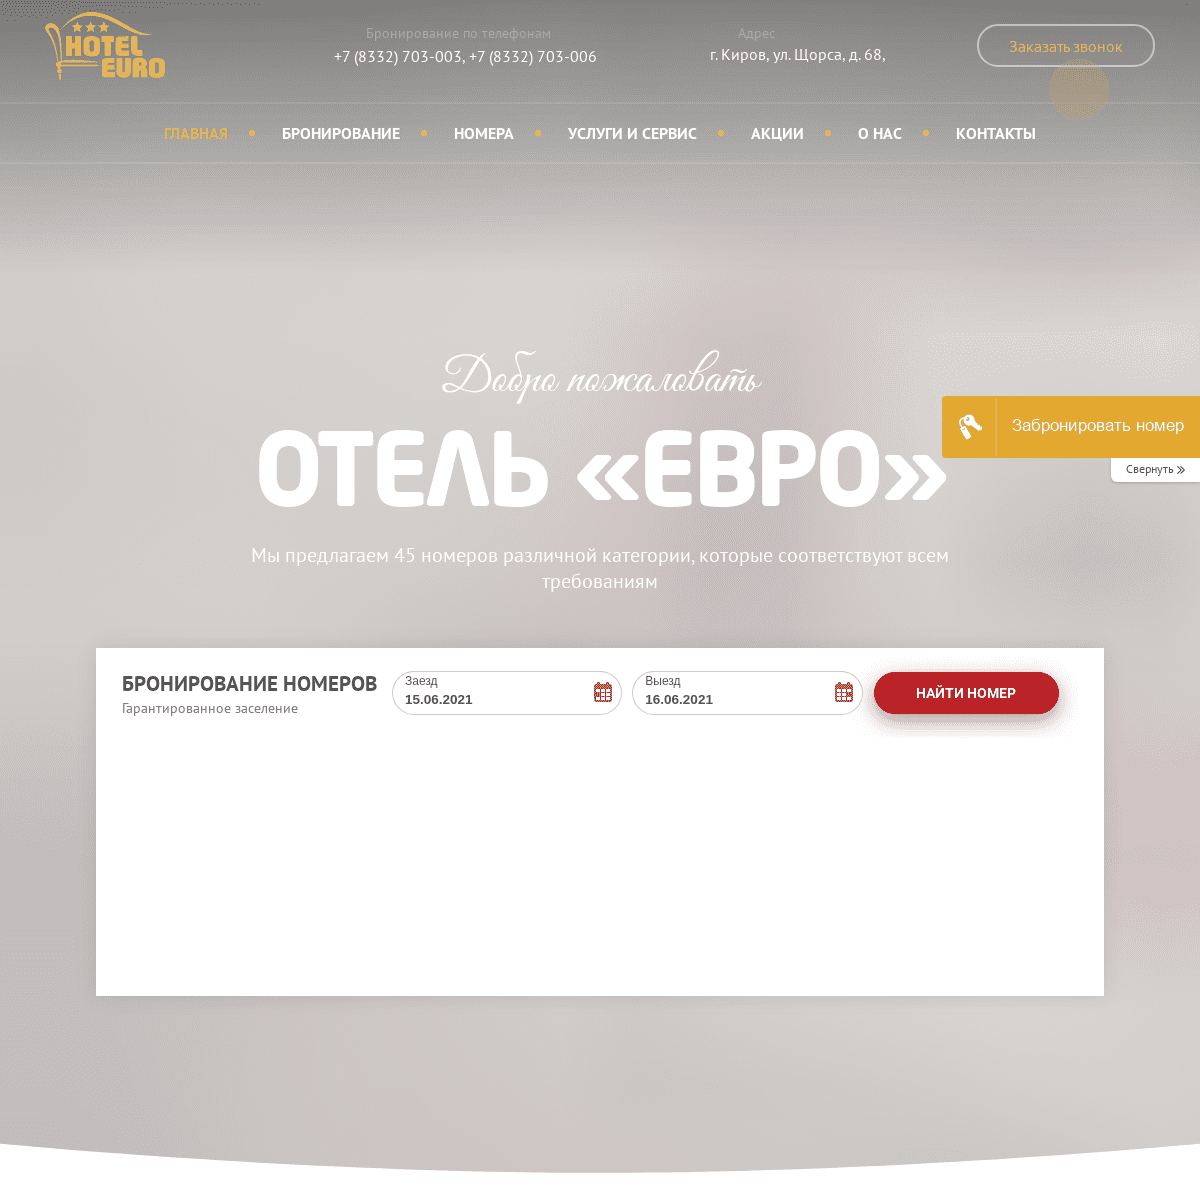 A complete backup of https://oteleuro.ru